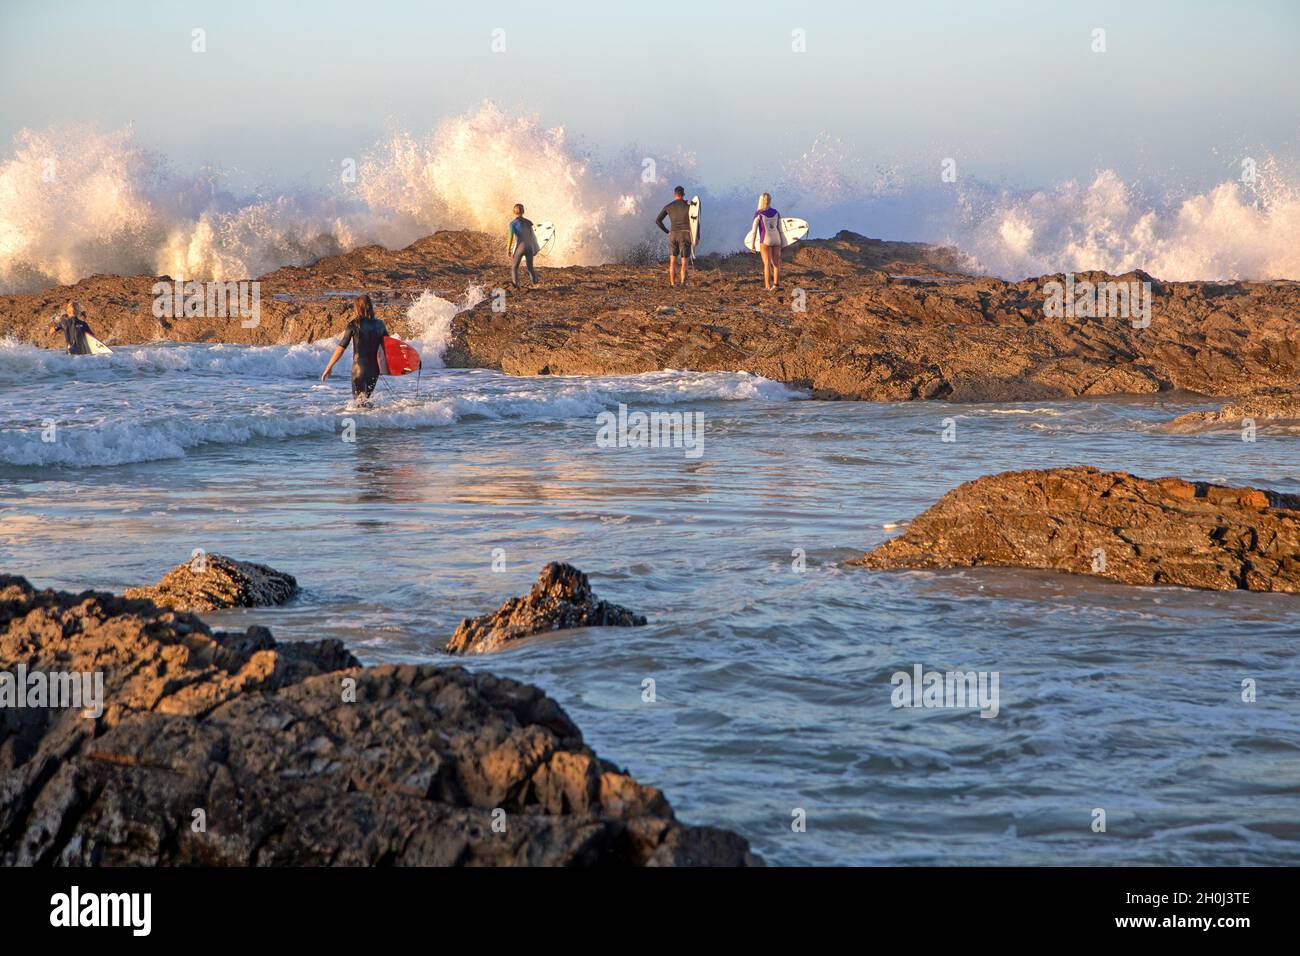 Surfers at Snapper Rocks, Coolangatta Stock Photo